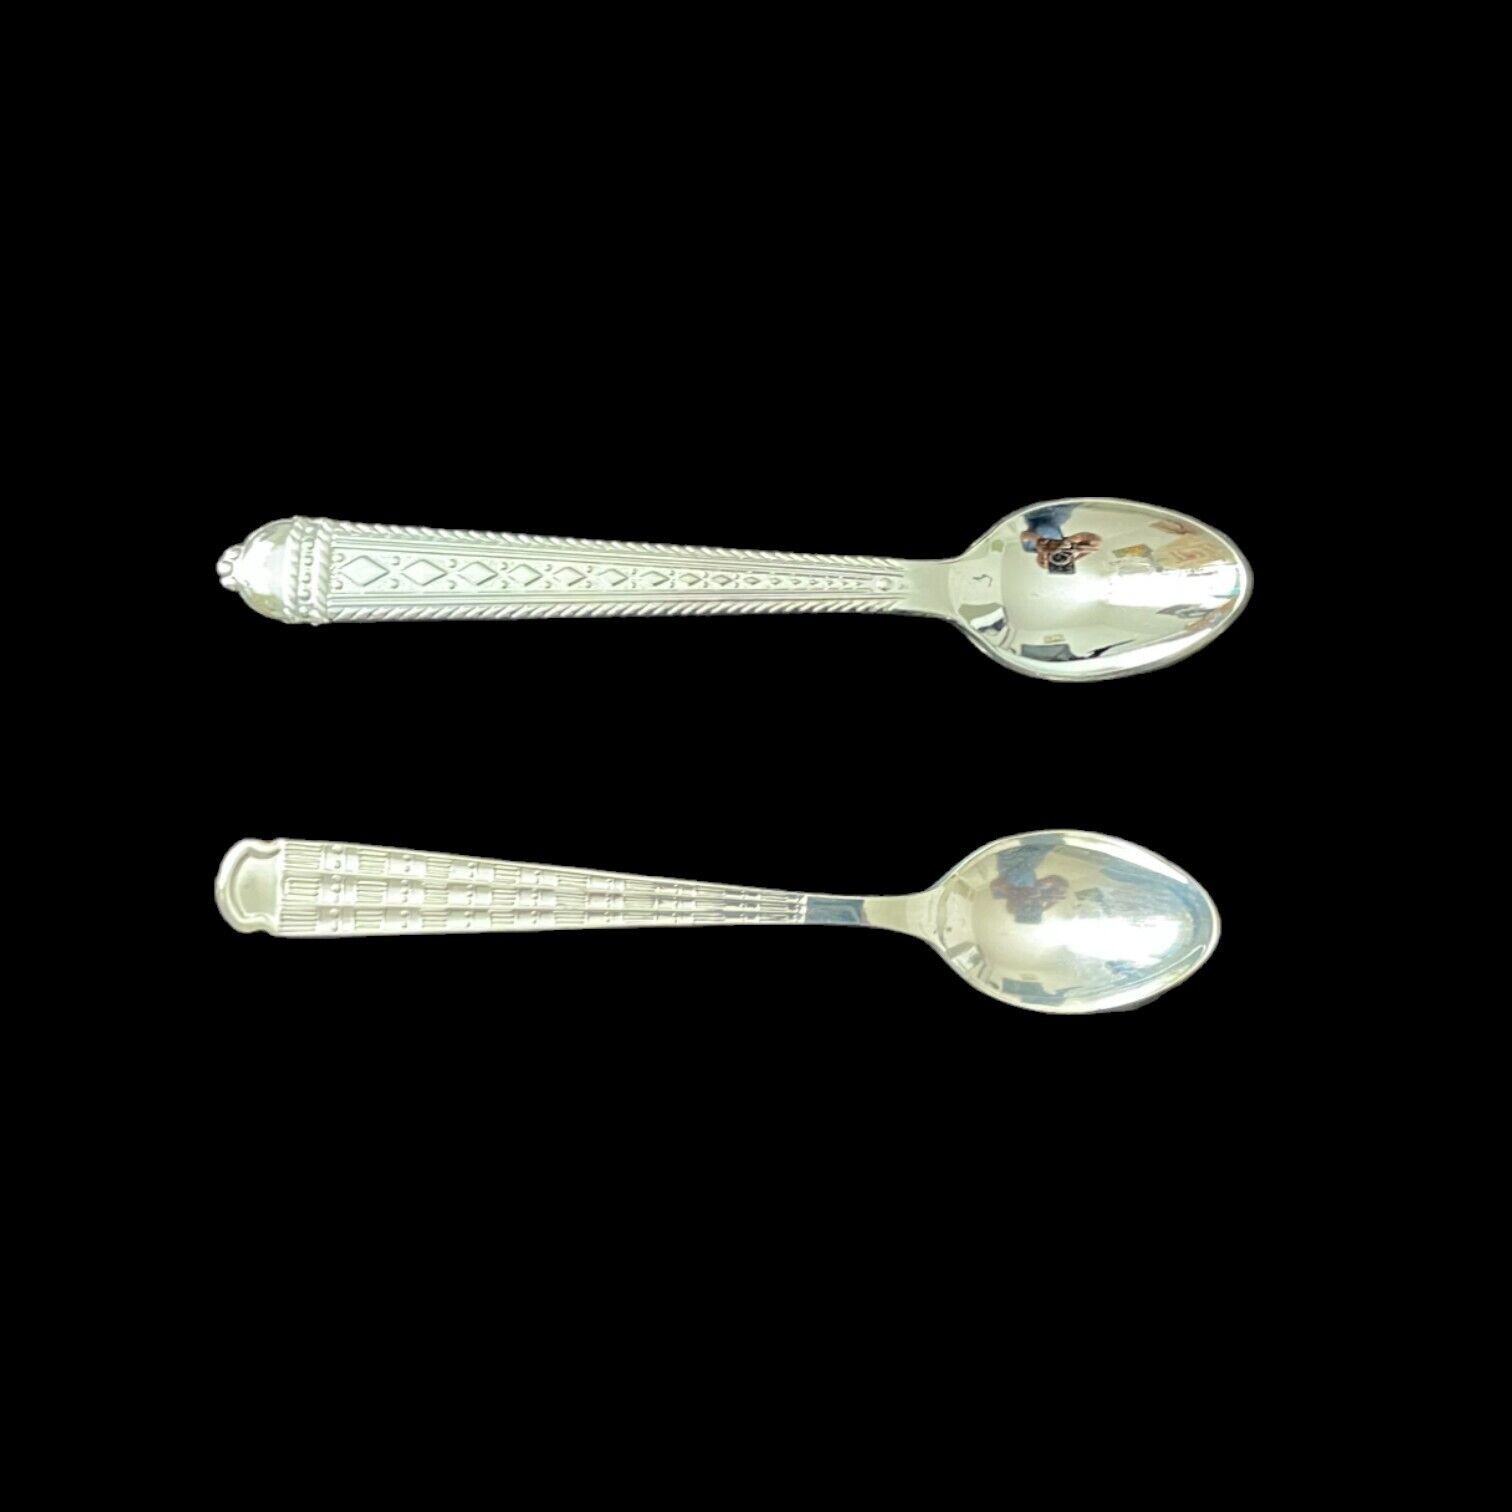 Ethiopian Coffee Spoon Collection - Antique Axum, and Harer Hallmark